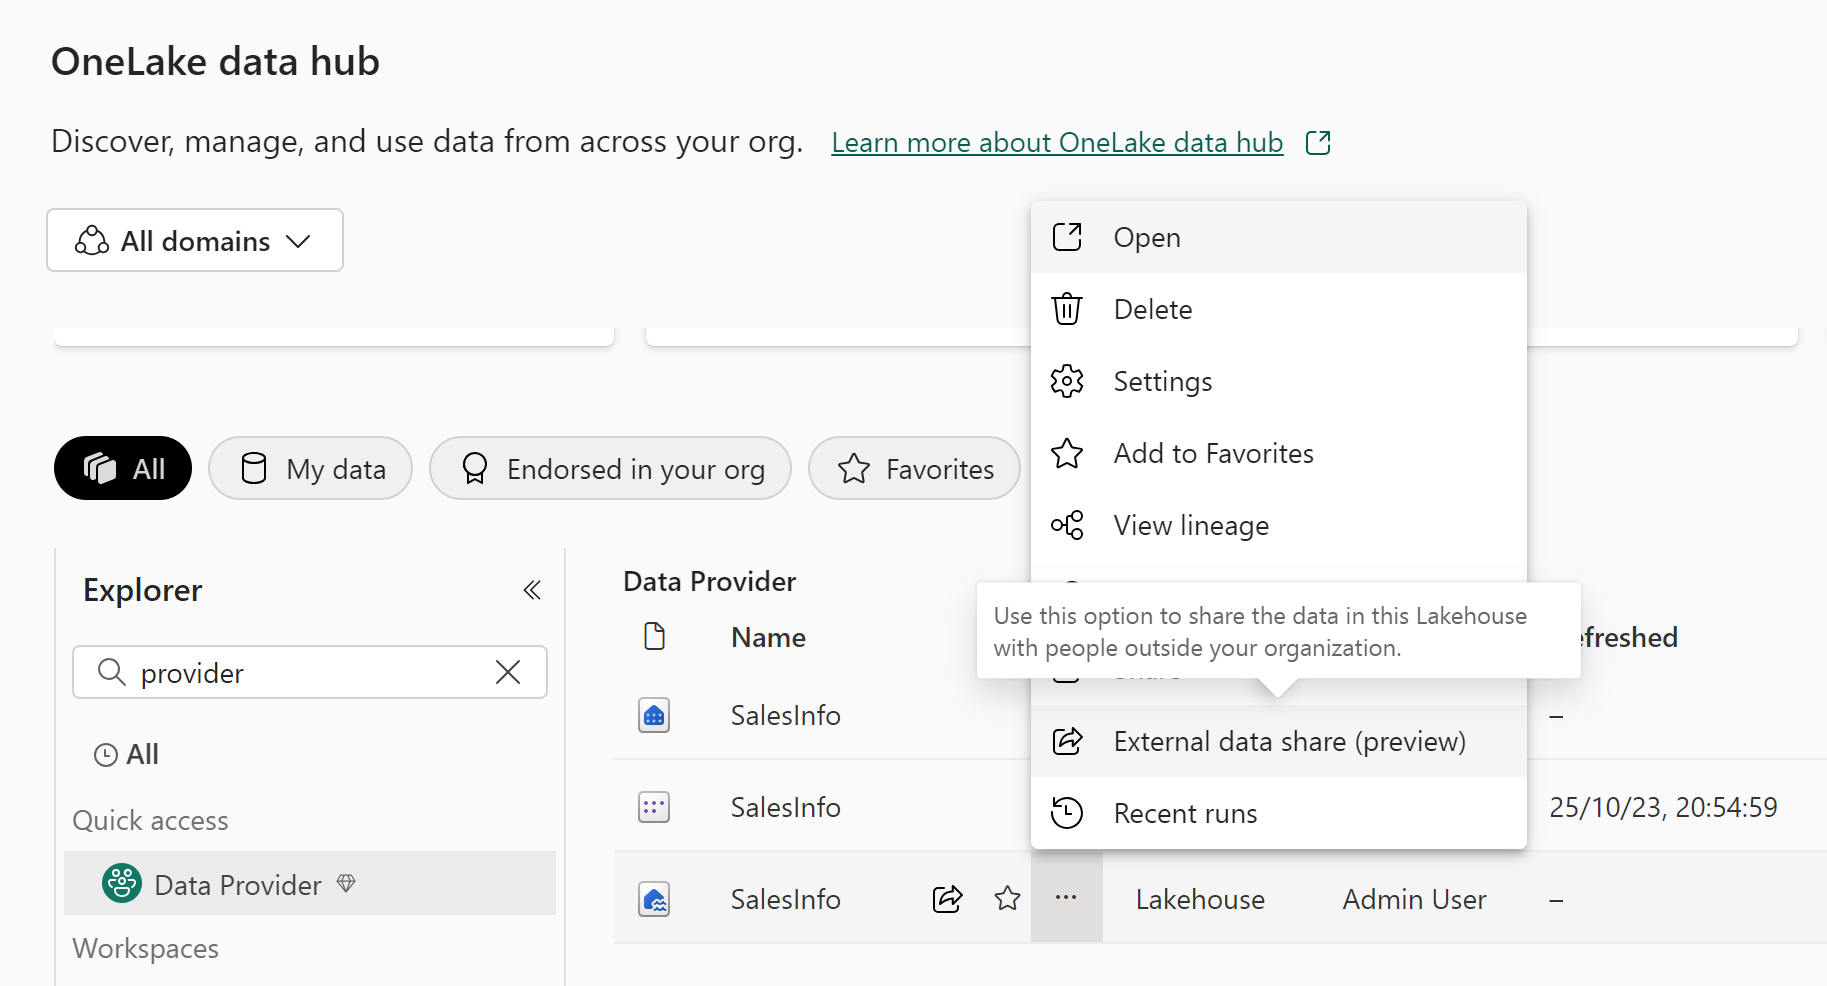 Screenshot showing the external data share option in an item's options menu.